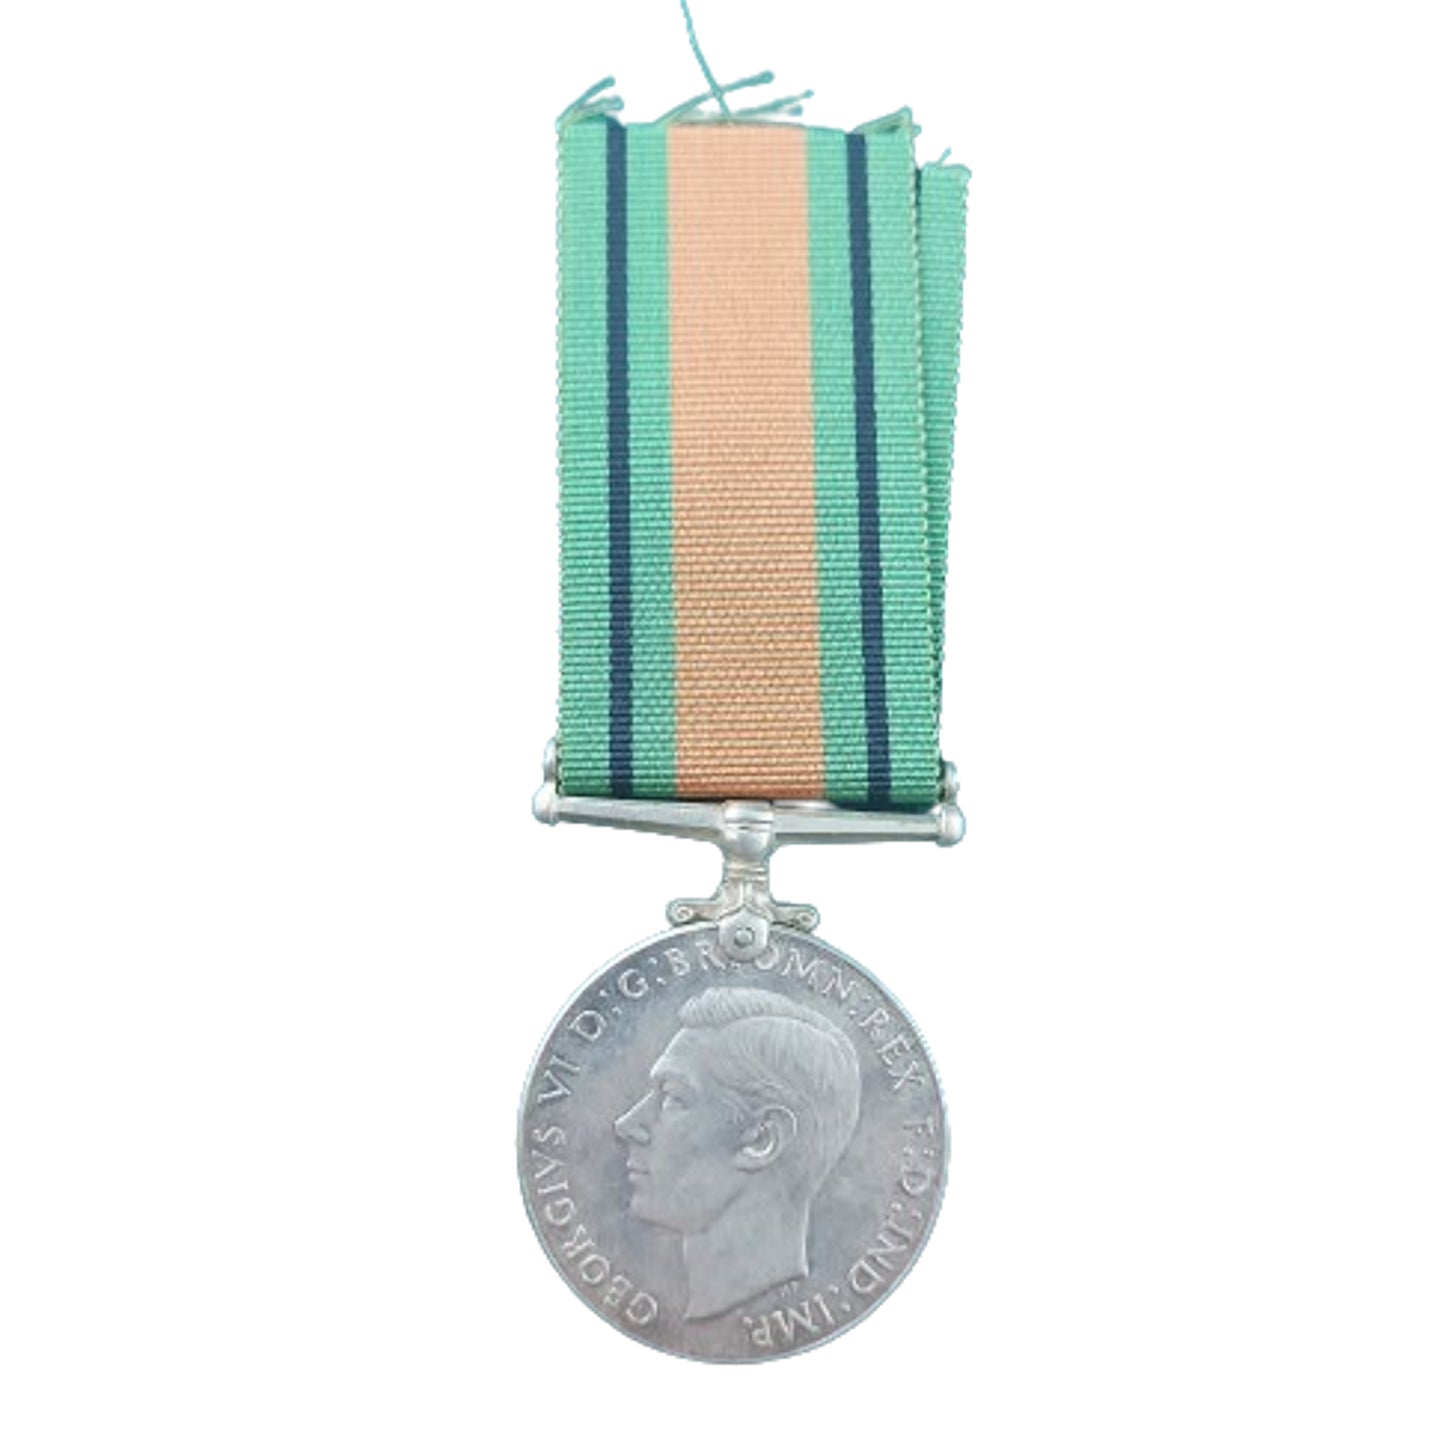 WW2 British Defence Medal